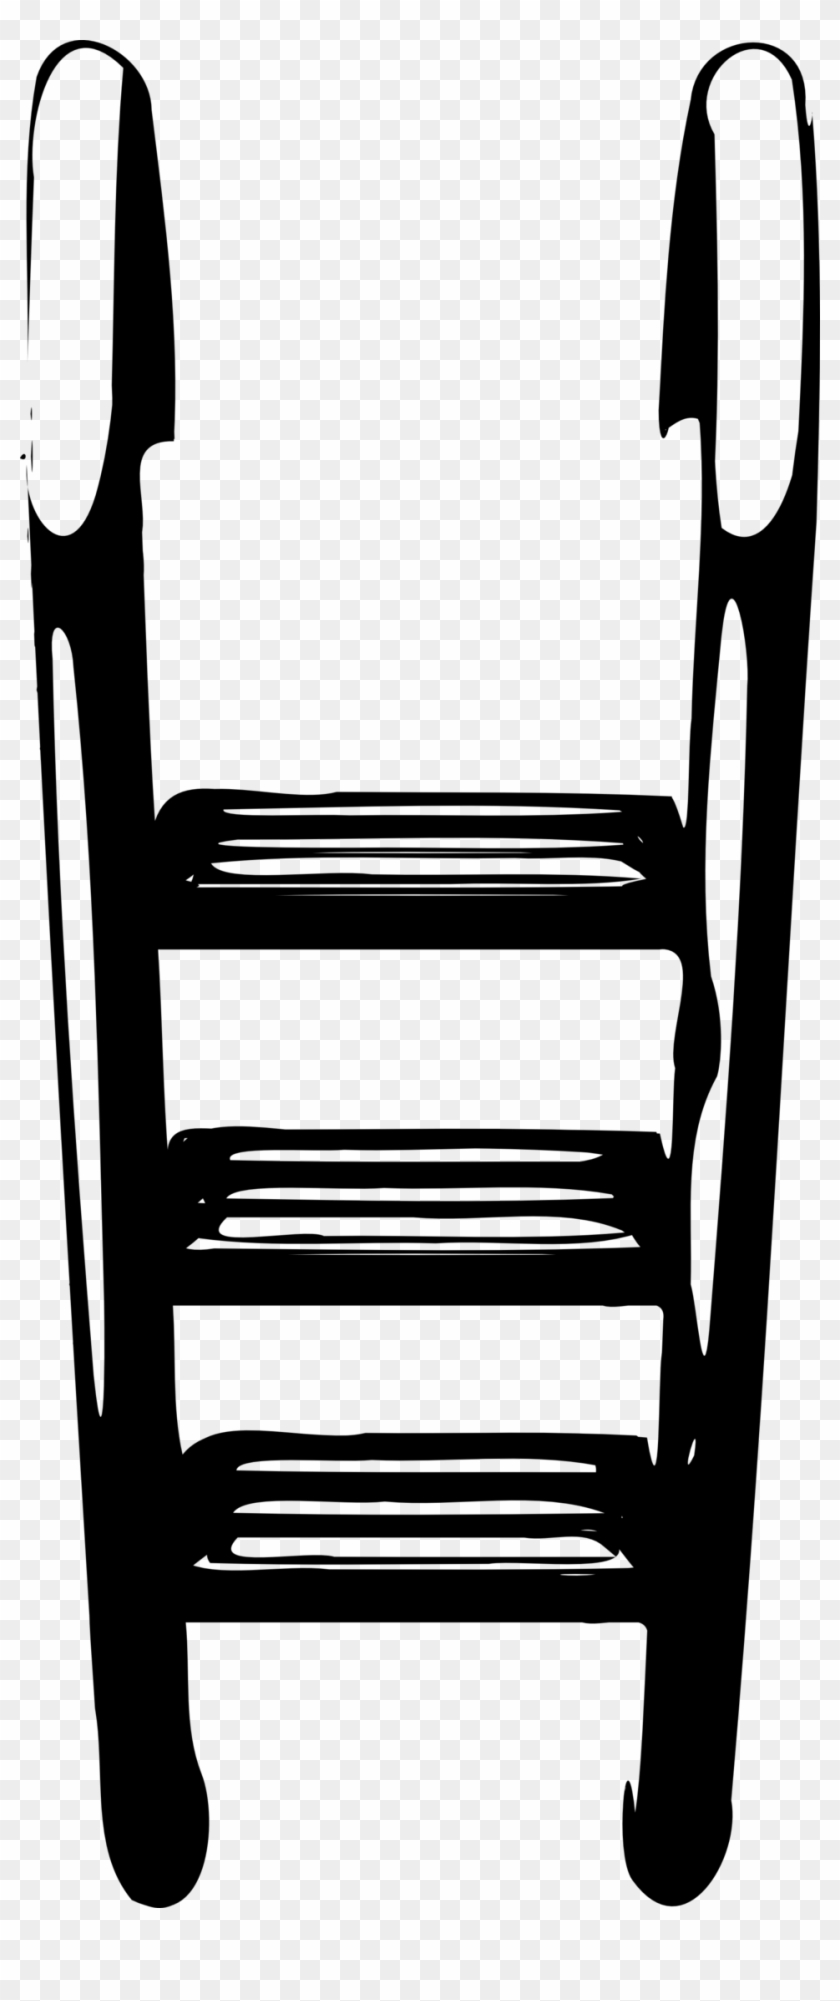 Swimming Pool Ladder - Pool Ladder Clip Art #112462